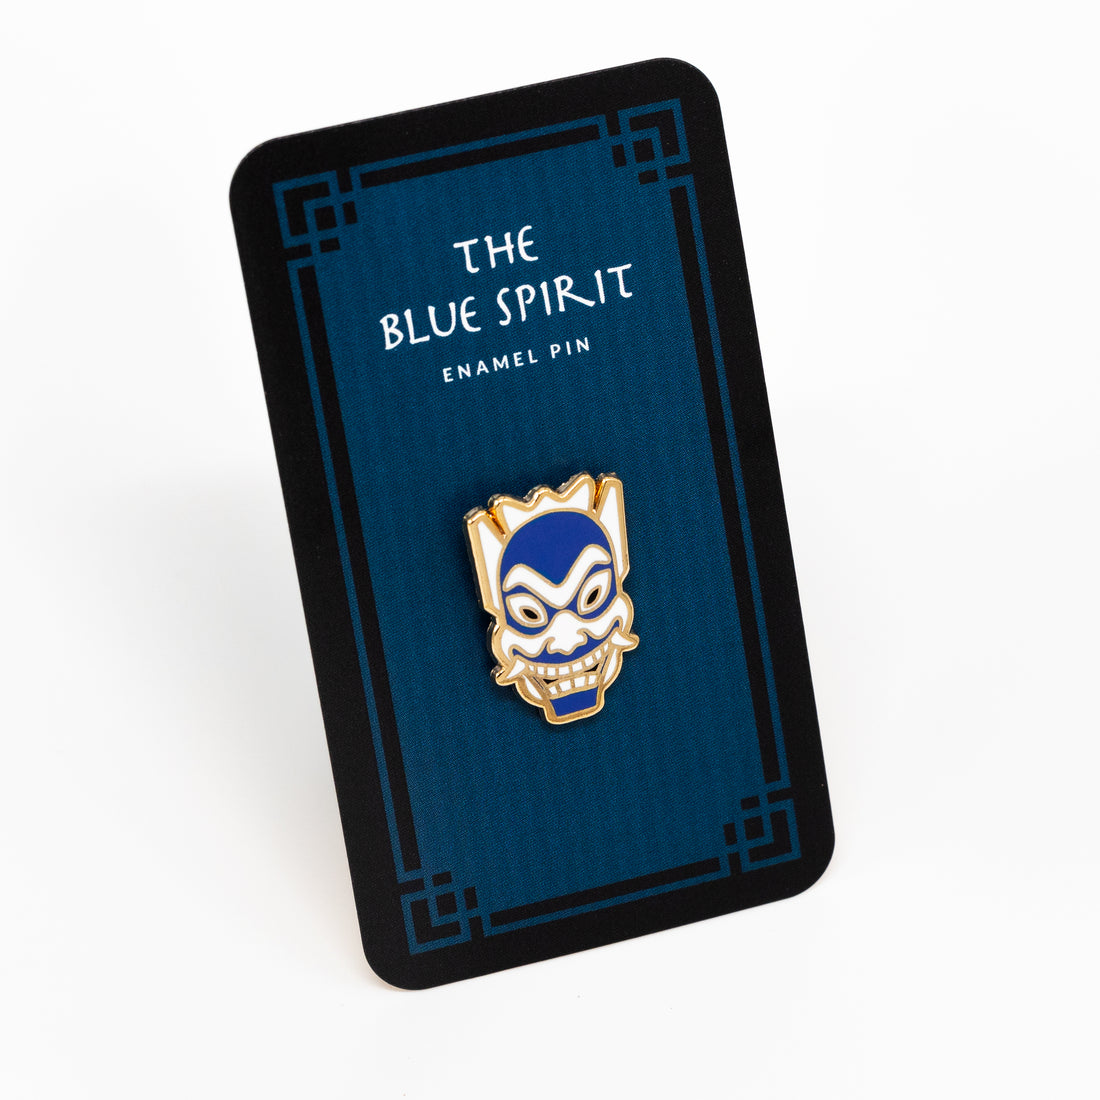 Blue spirit enamel pin on a dark blue backing card.